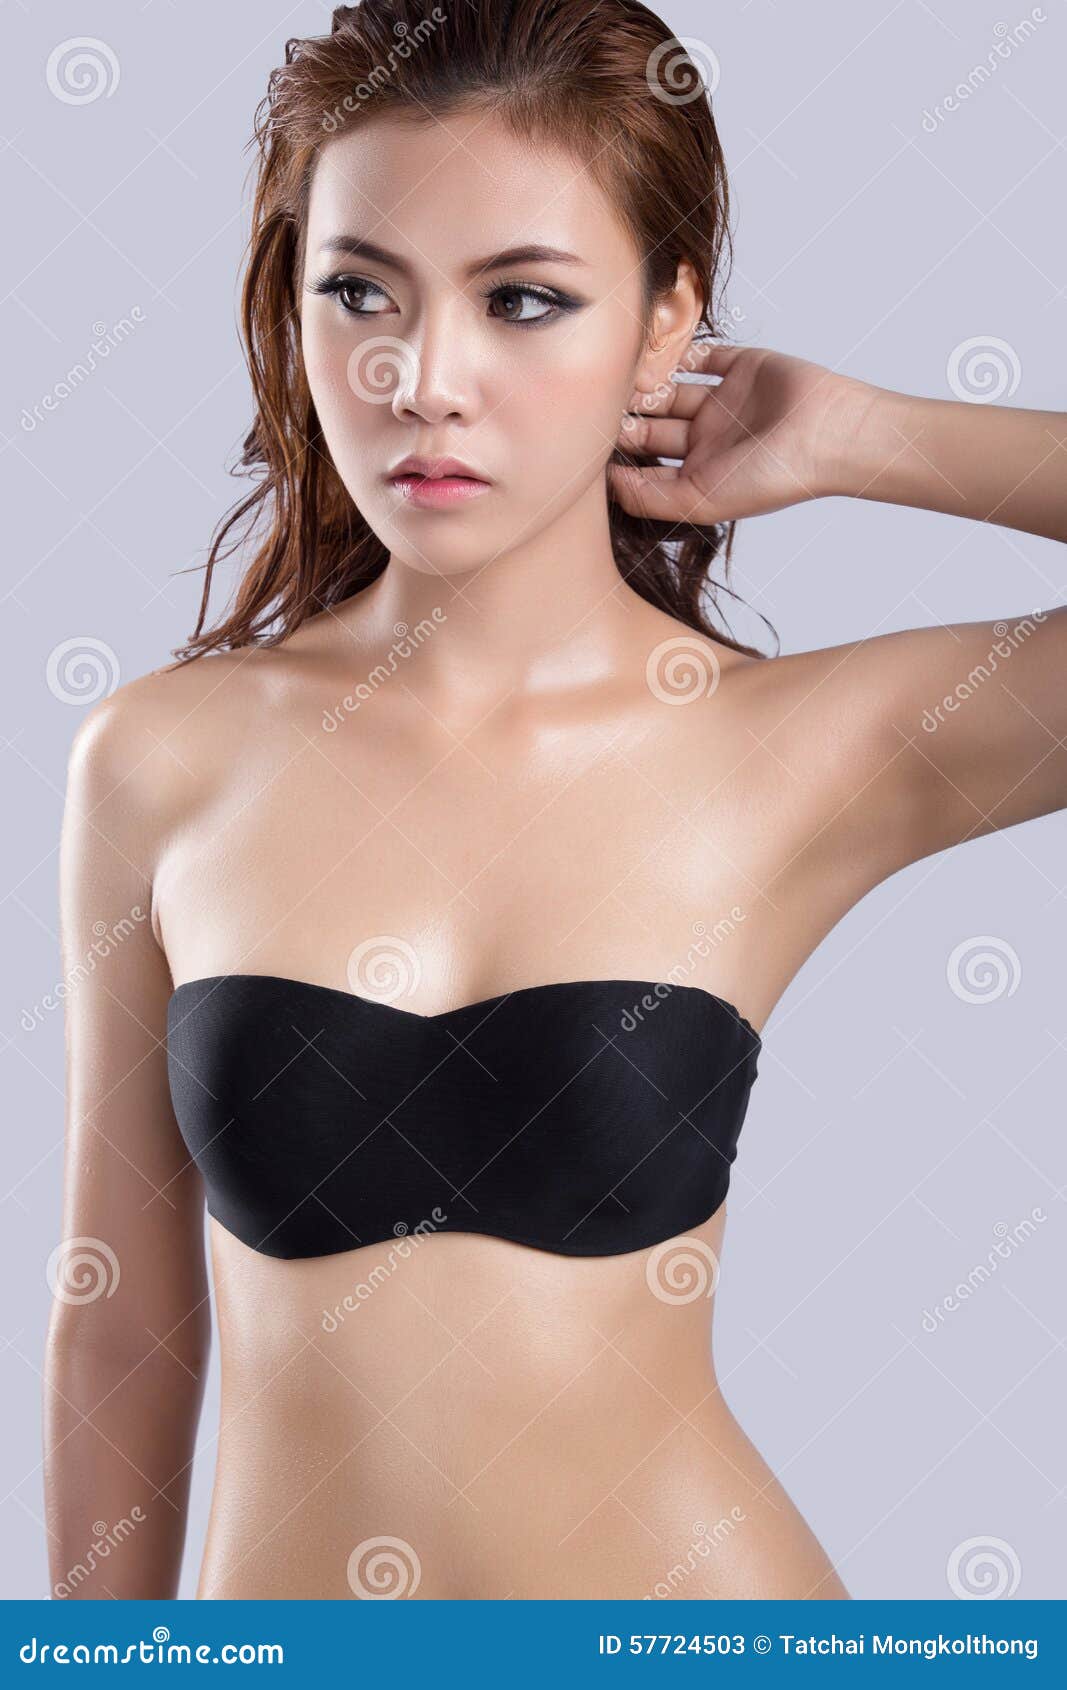 https://thumbs.dreamstime.com/z/asian-beauty-sexy-woman-model-studio-shot-57724503.jpg